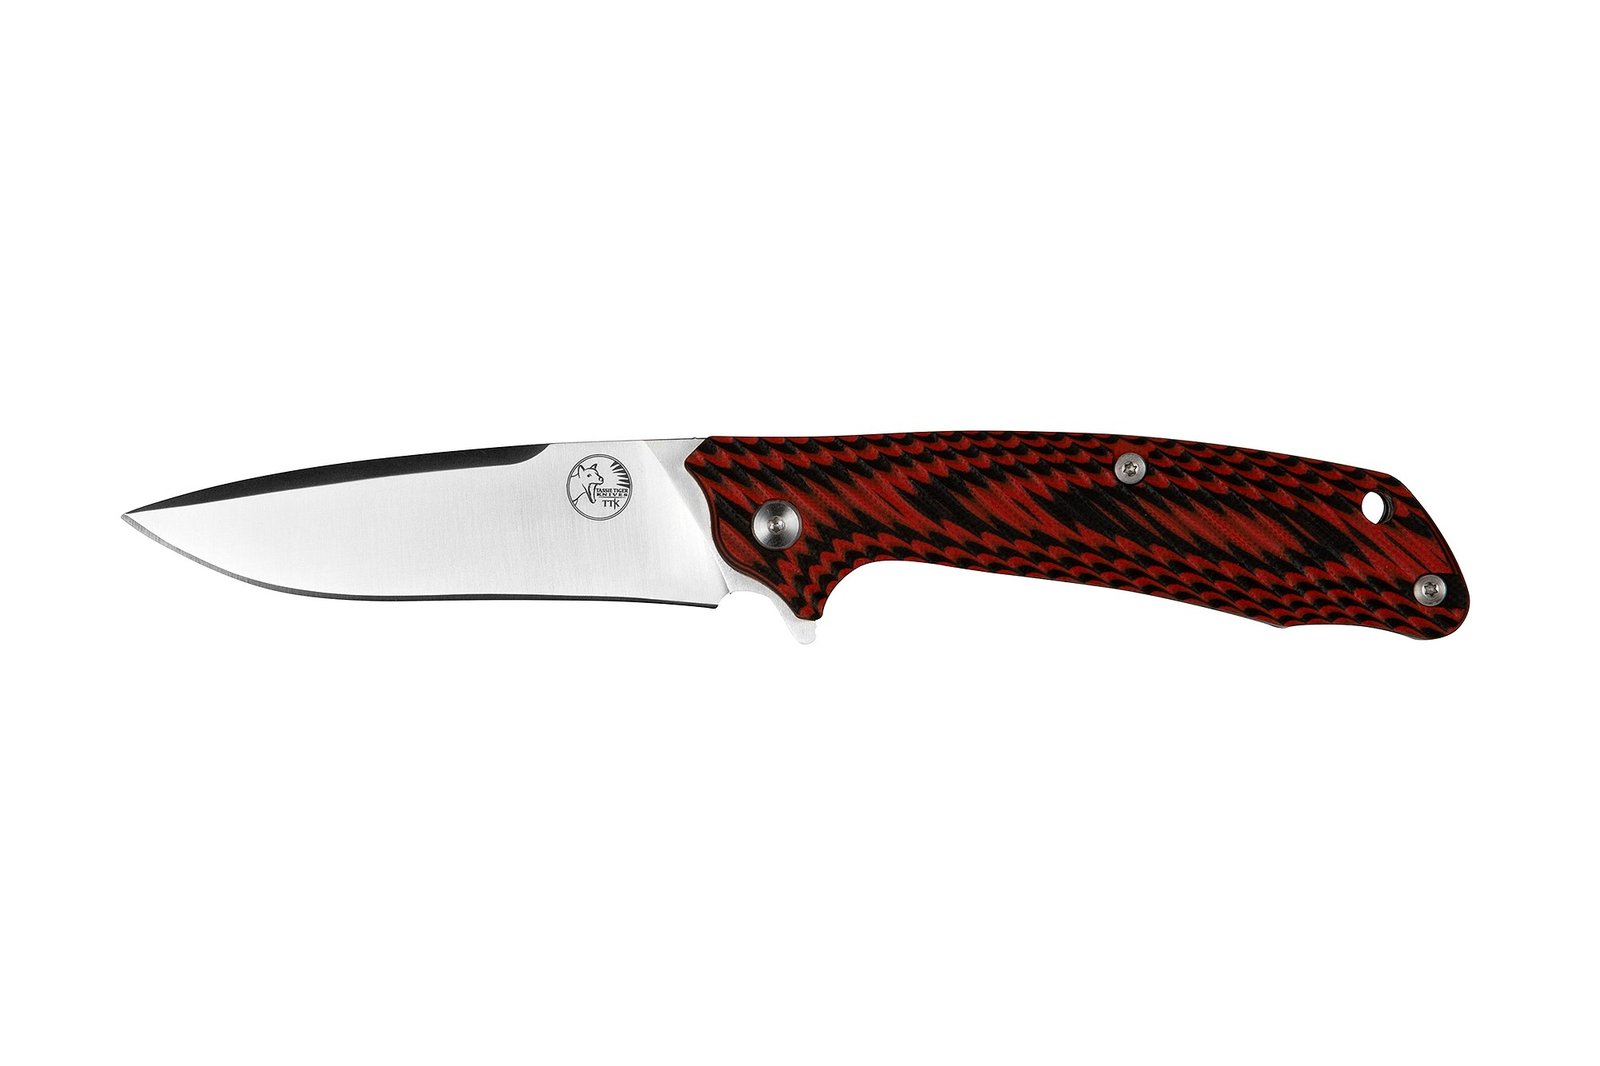 Folding Pocket Knife with Red & Black G10 Handle, 89mm D2 Blade